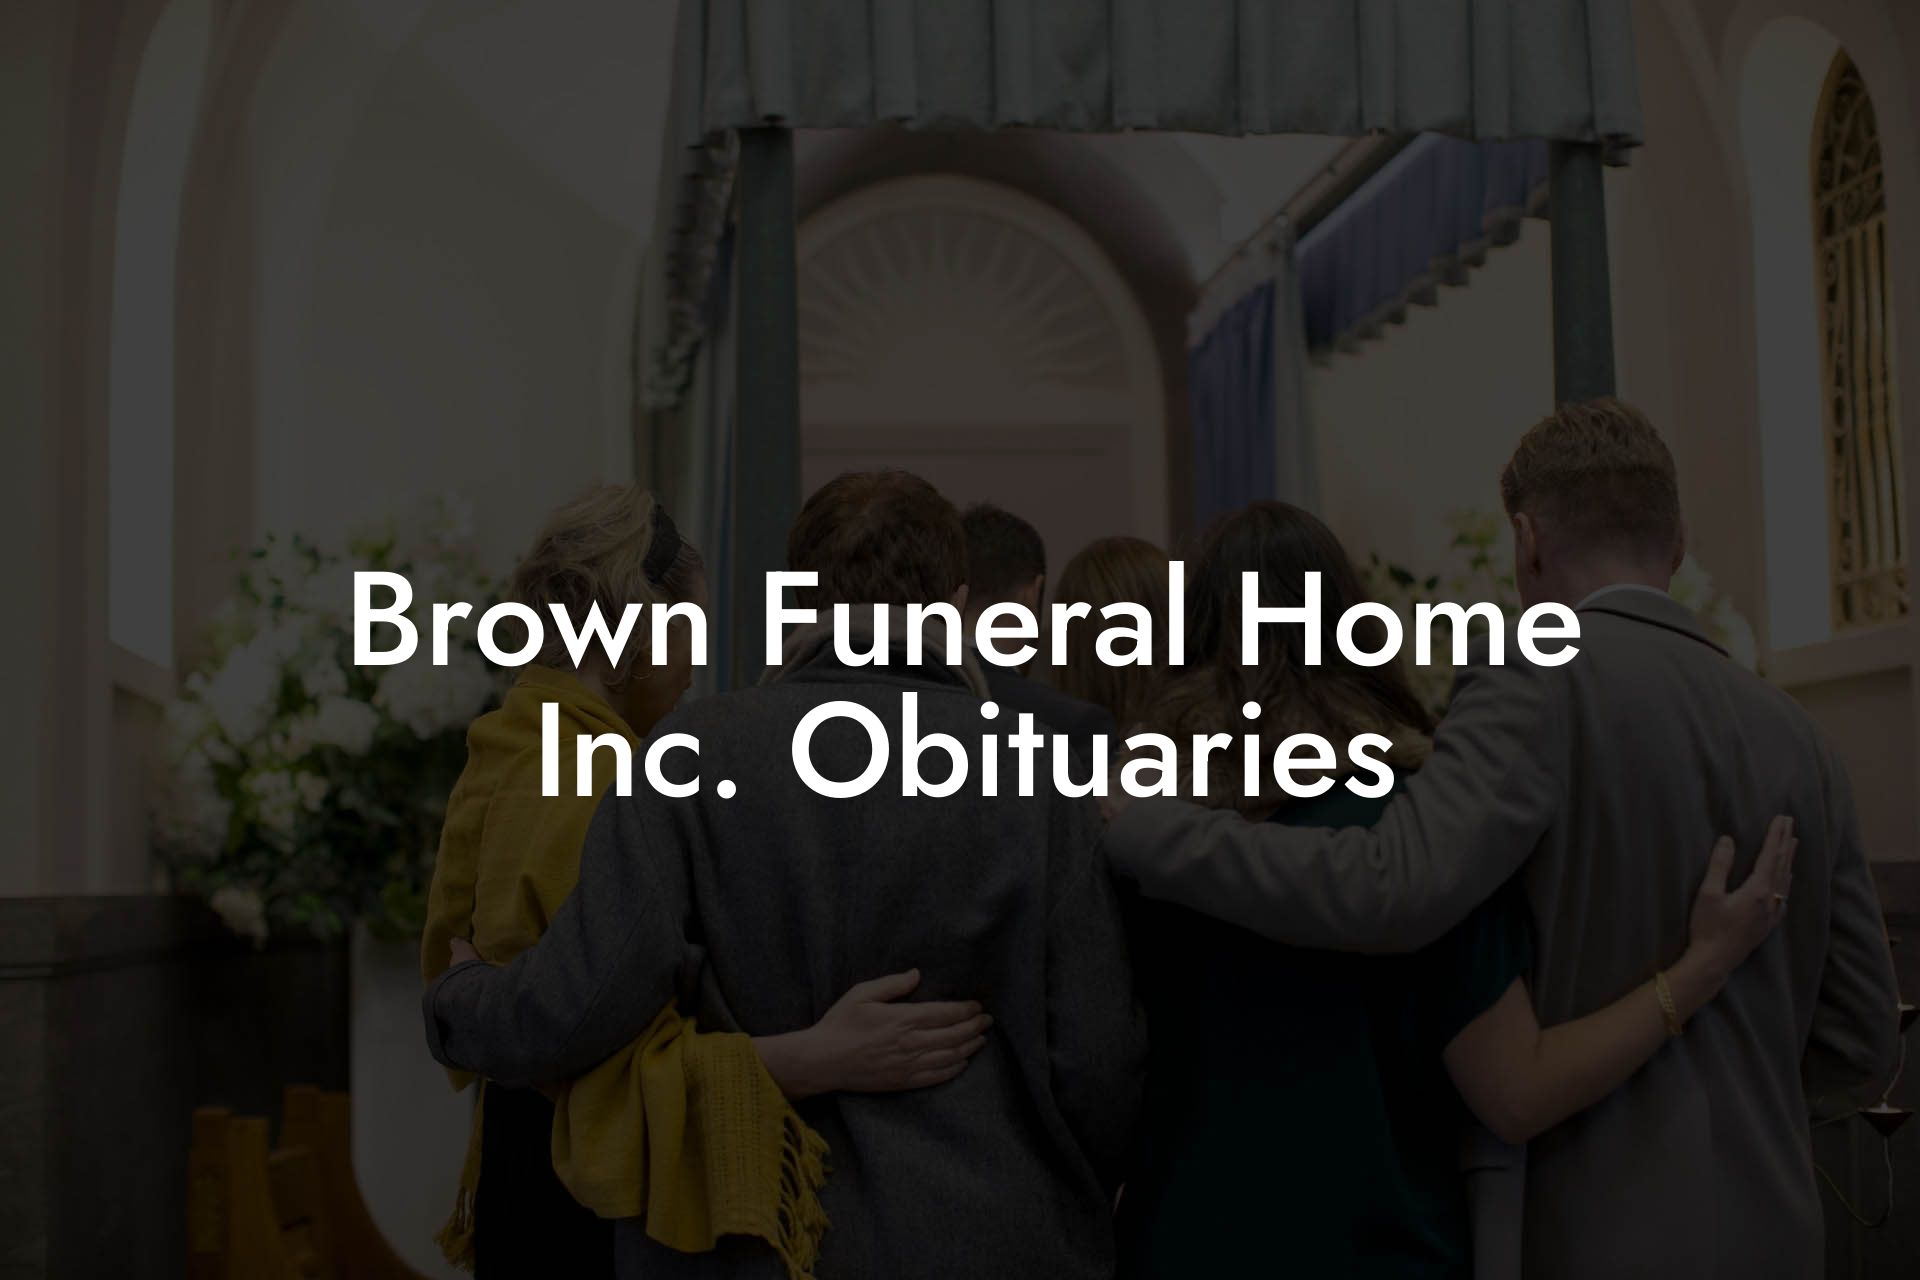 Brown Funeral Home, Inc. Obituaries